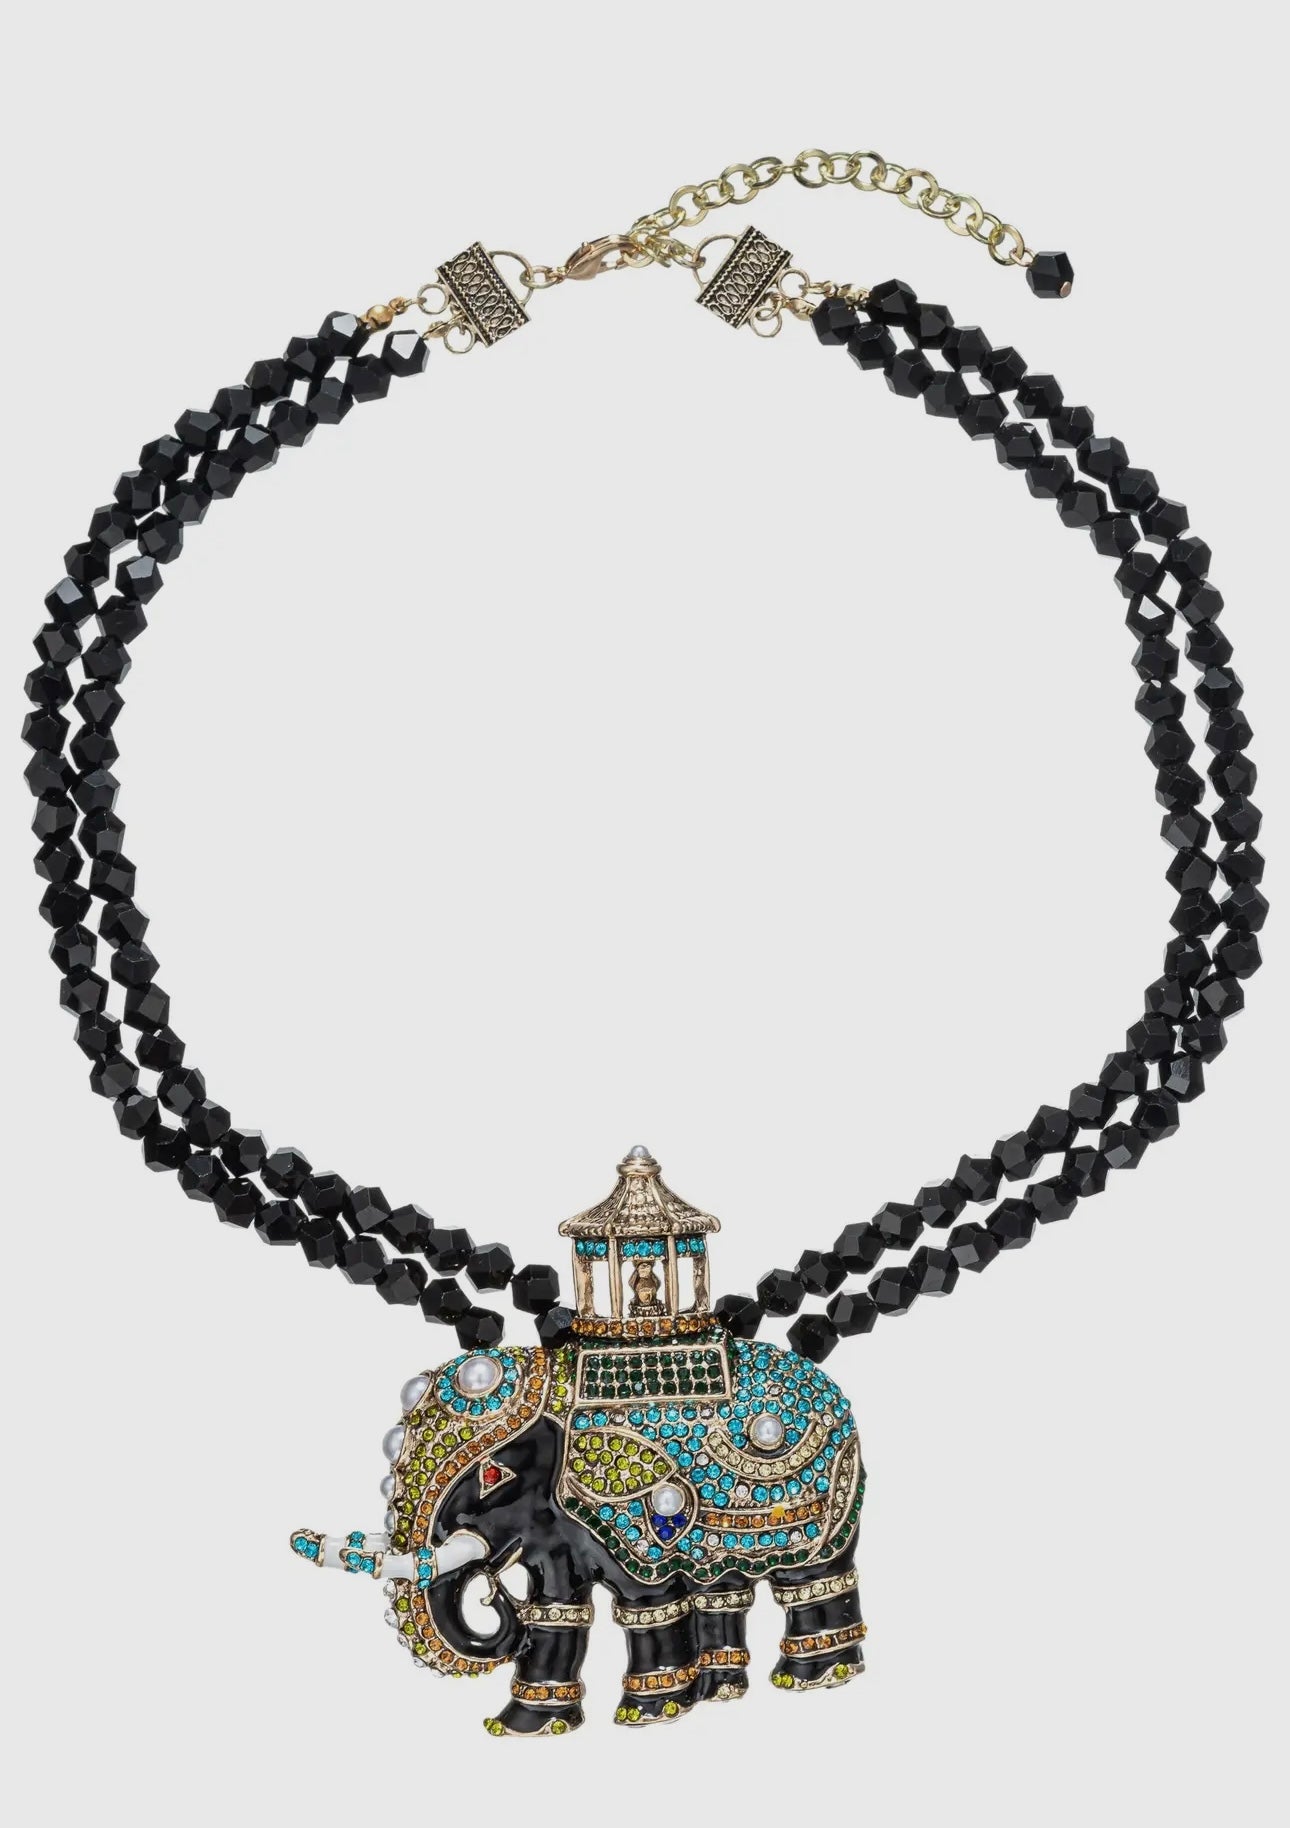 Raja agate elephant necklace